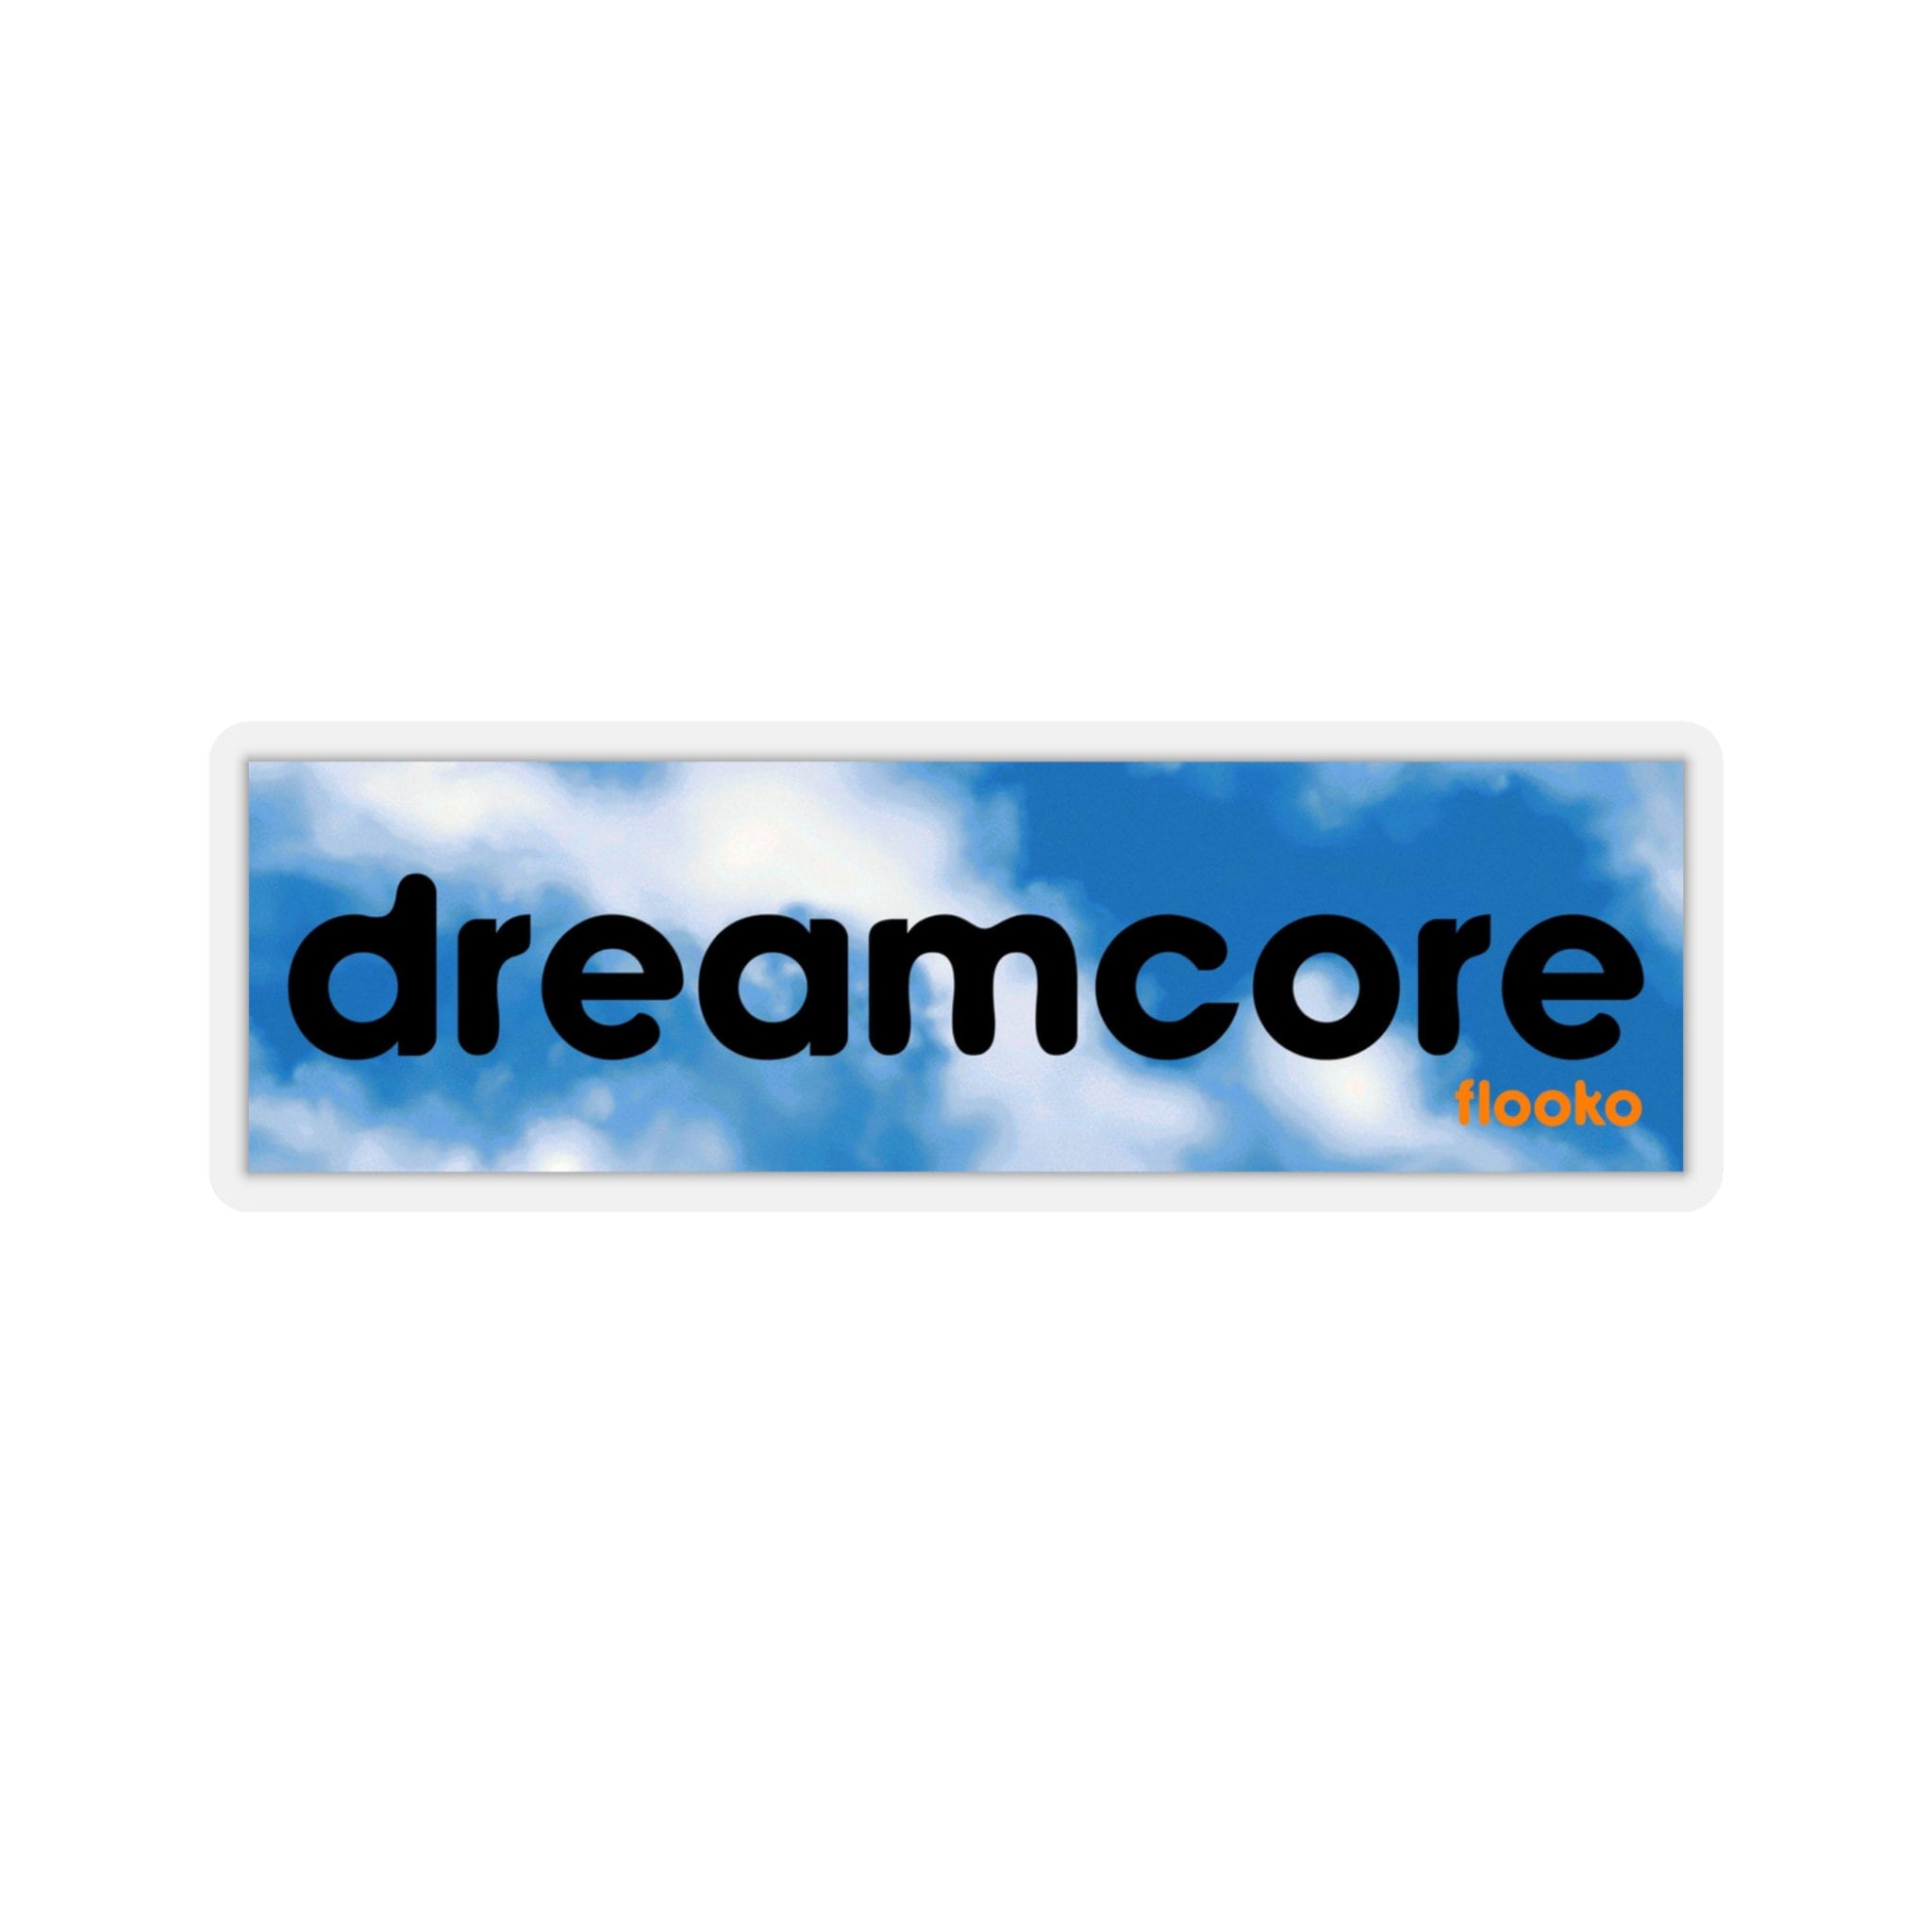 Dreamcore Stickers for Sale